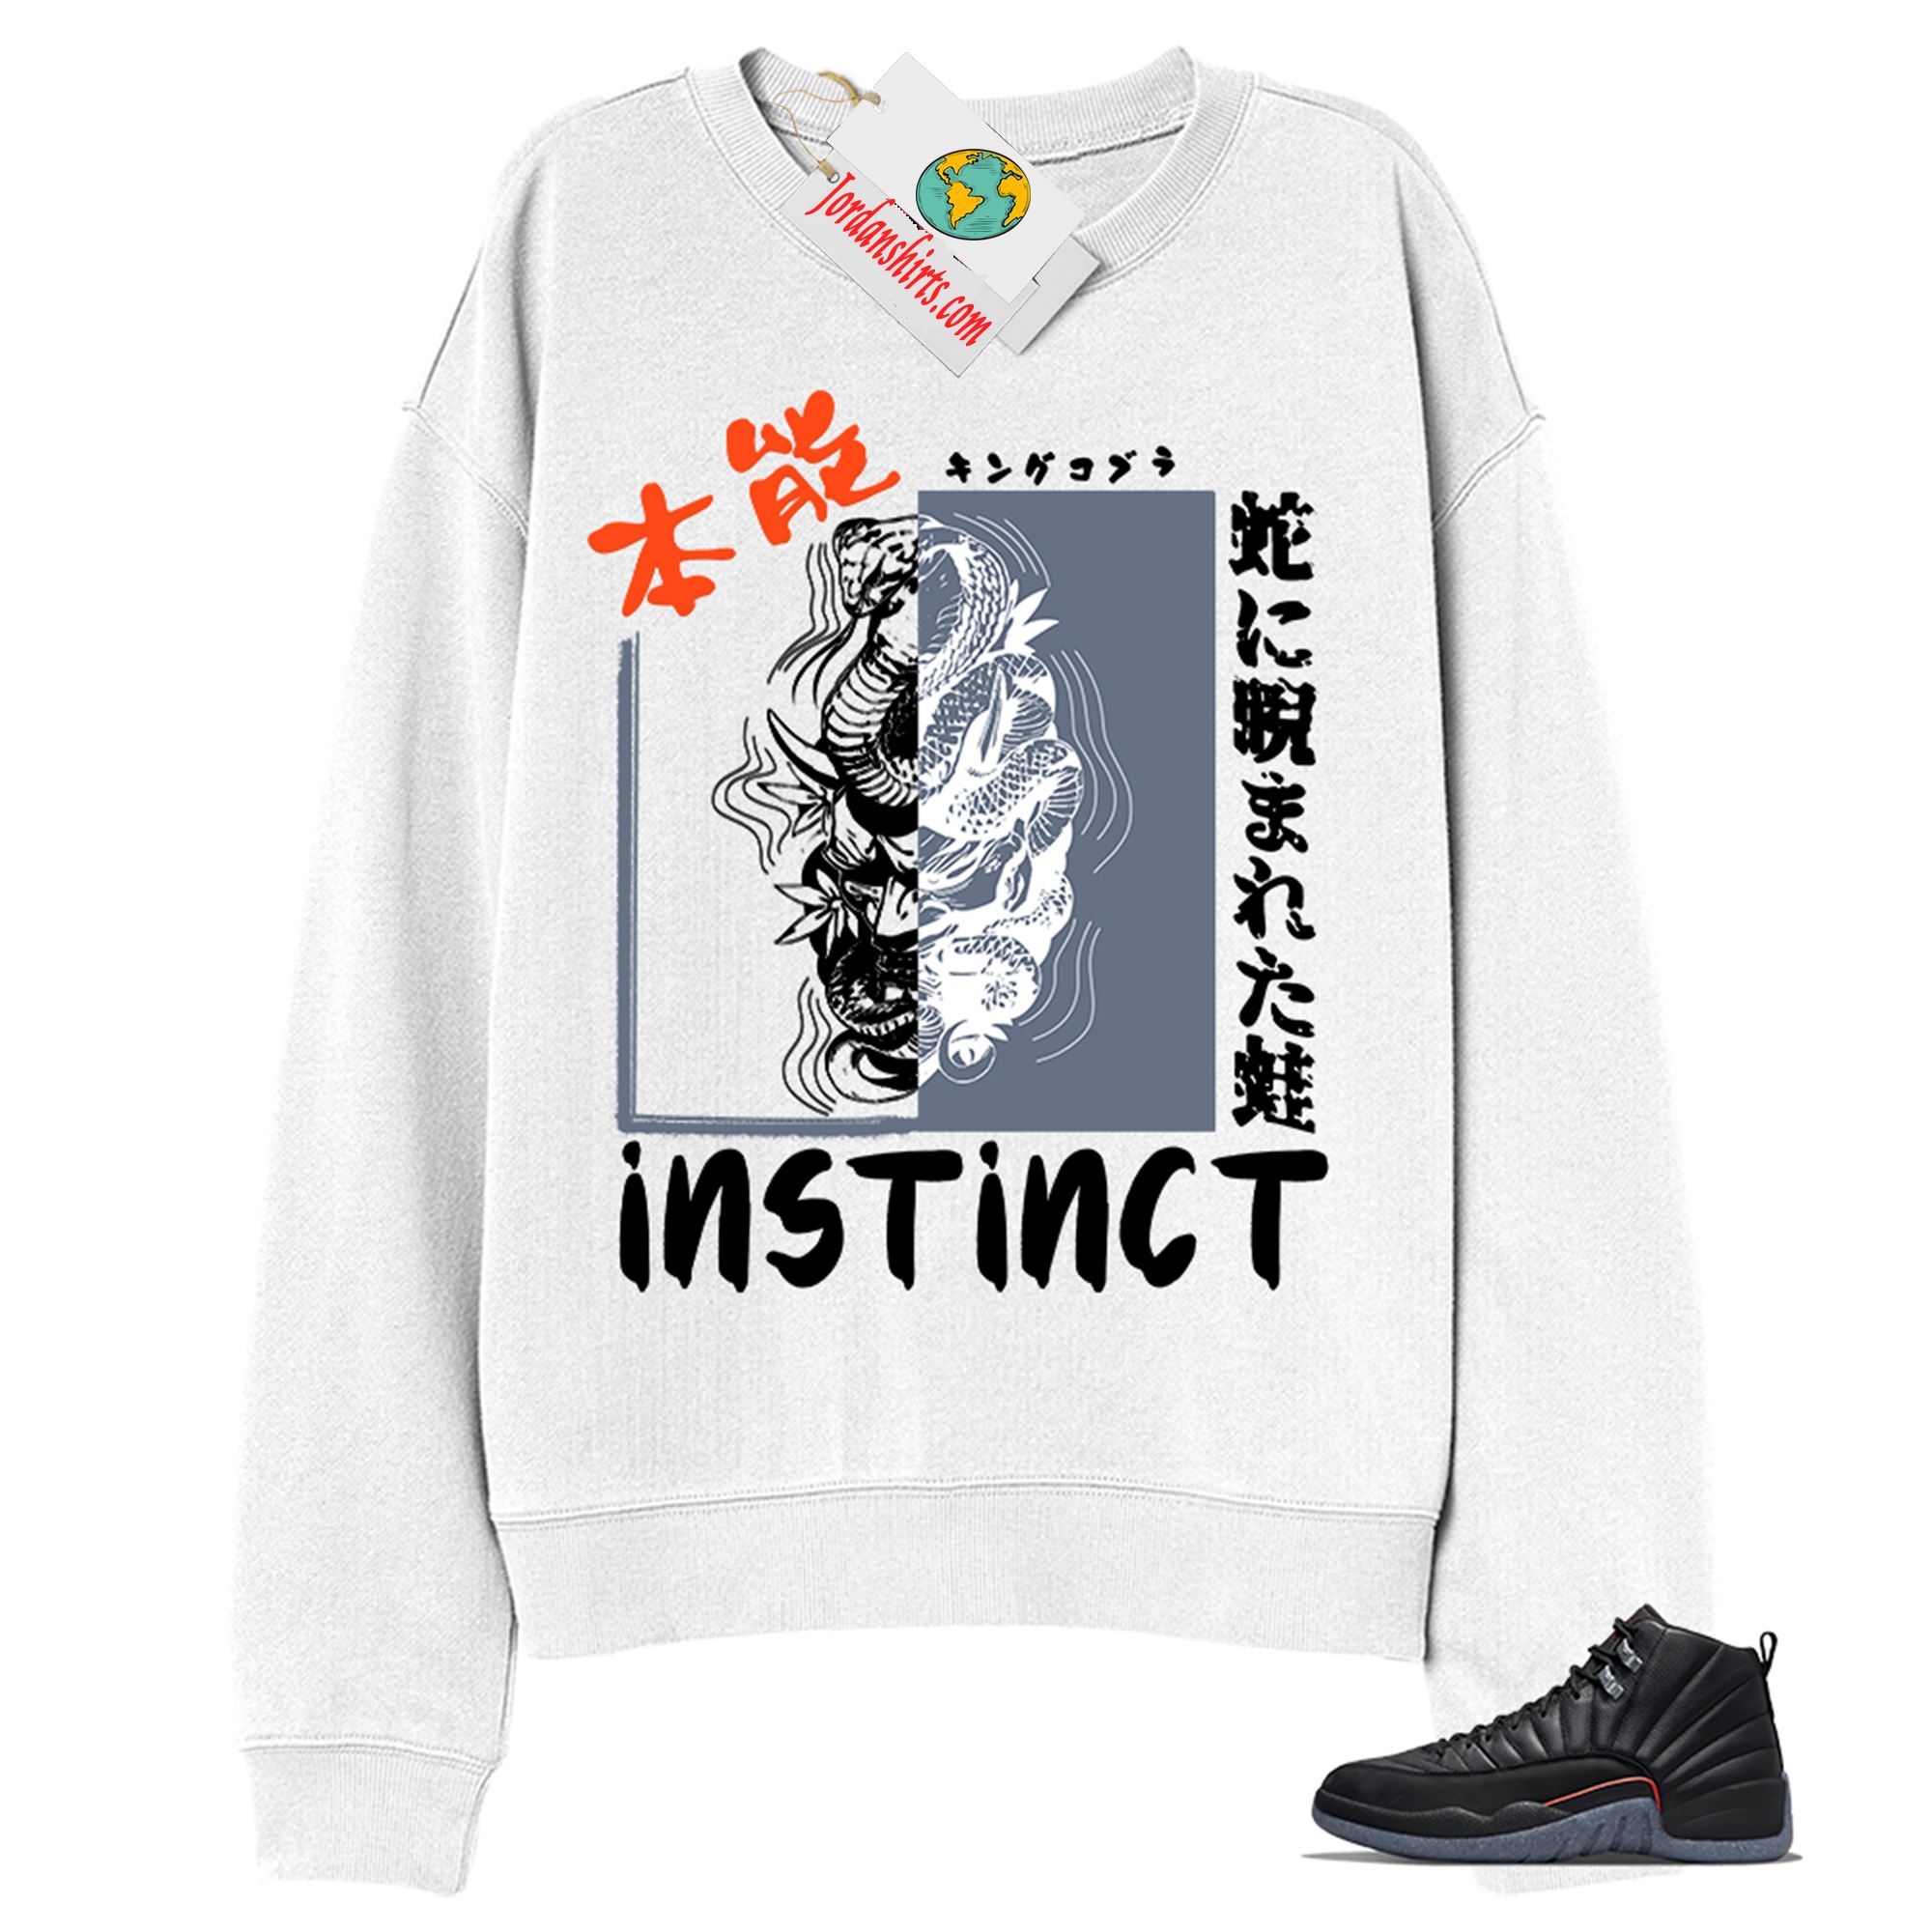 Jordan 12 Sweatshirt, Instinct Fearless Snake White Sweatshirt Air Jordan 12 Utility Grind 12s Plus Size Up To 5xl